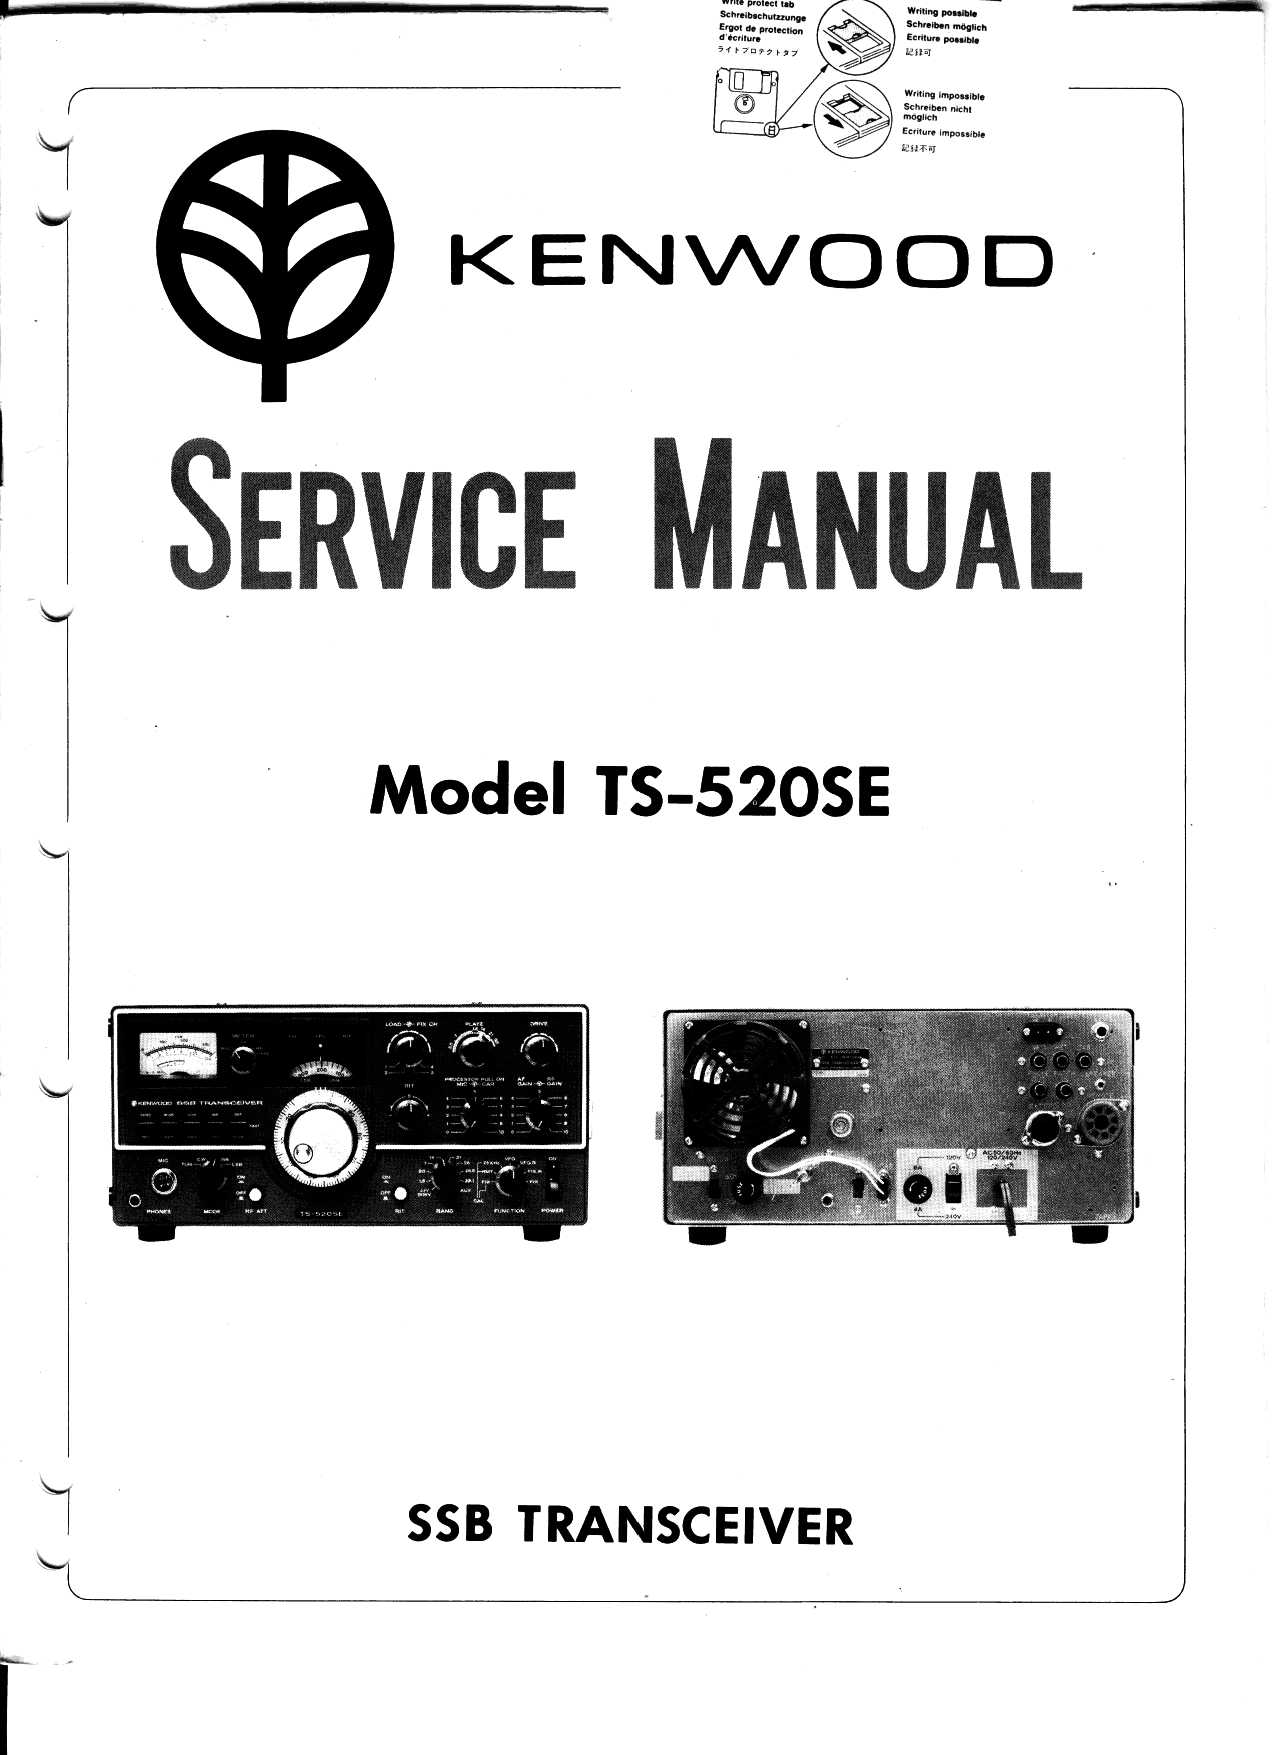 20Ms233s Service Manual